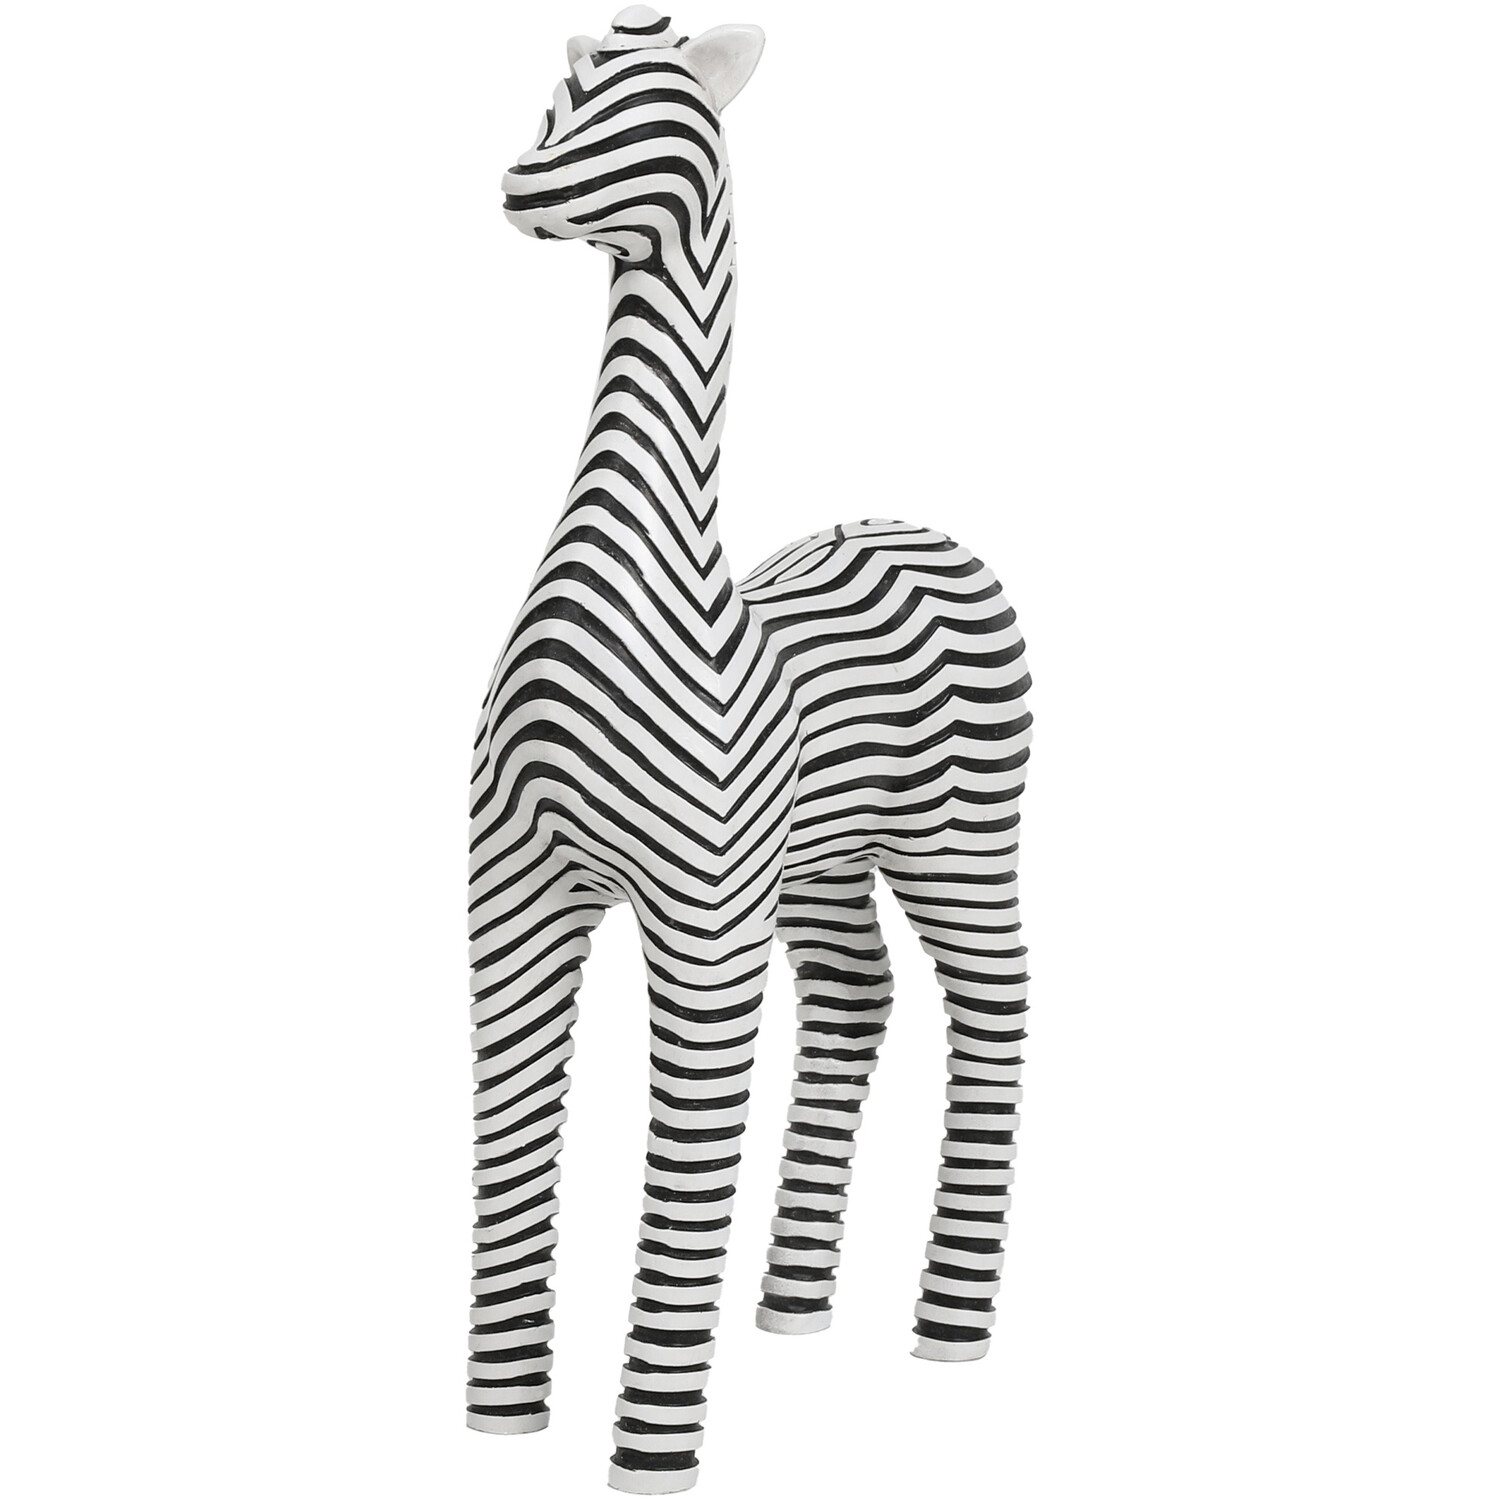 Black and White Zebra Ornament Image 1